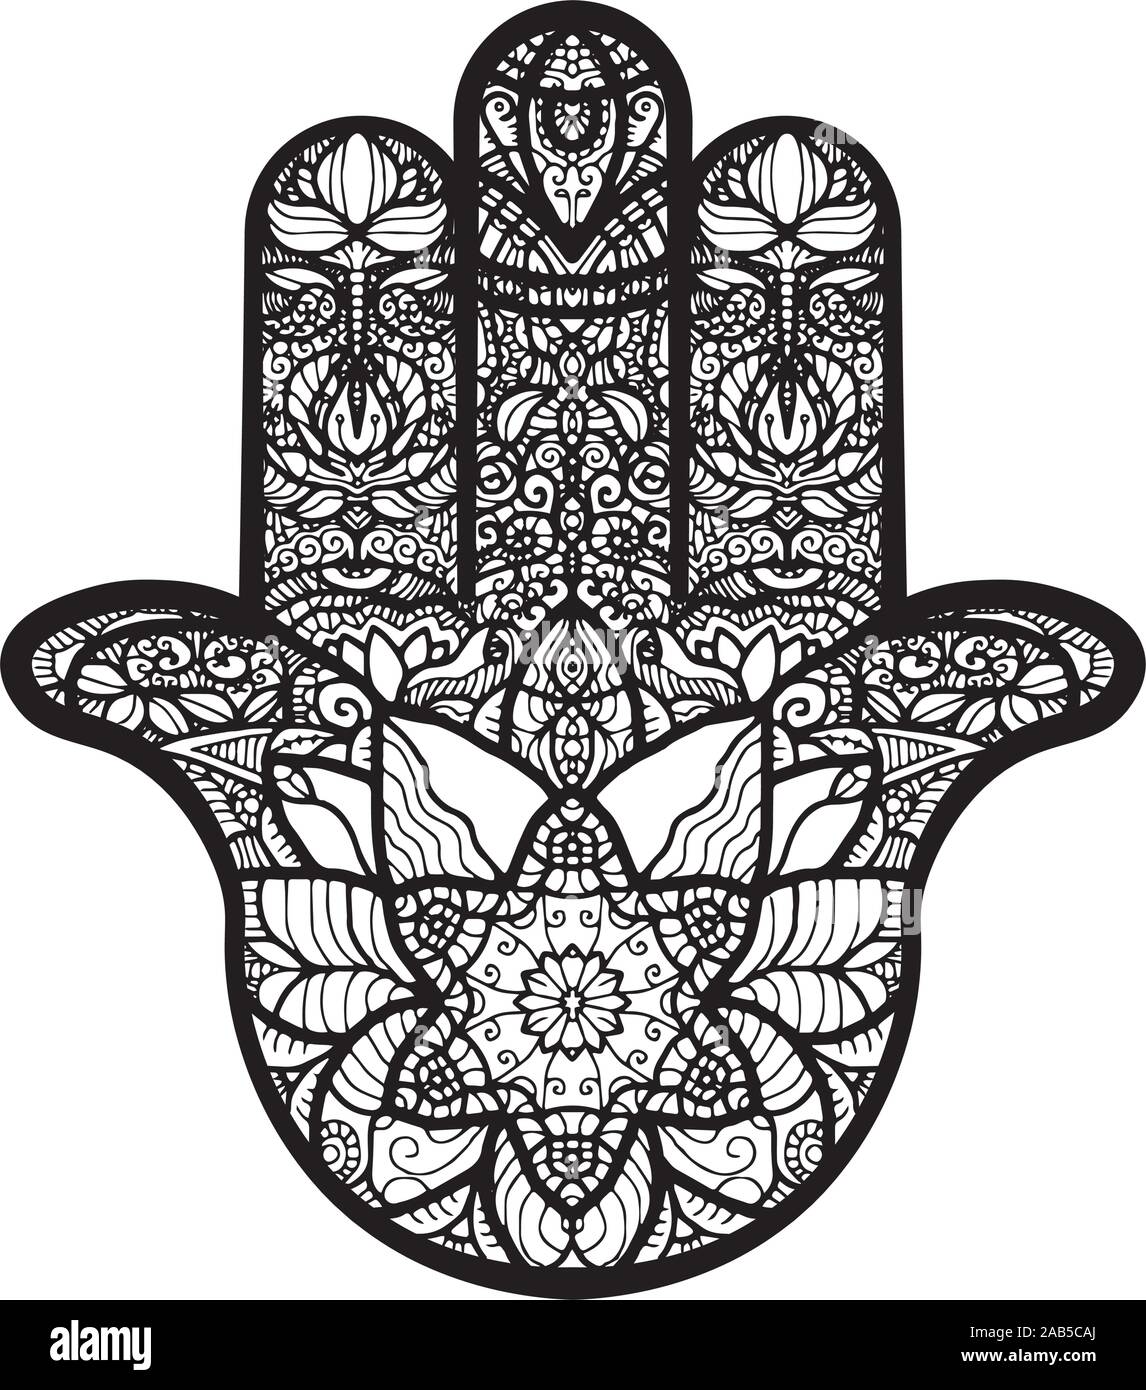 Alo Hamsa Khamsa symbole Main de Fatima Illustration de Vecteur